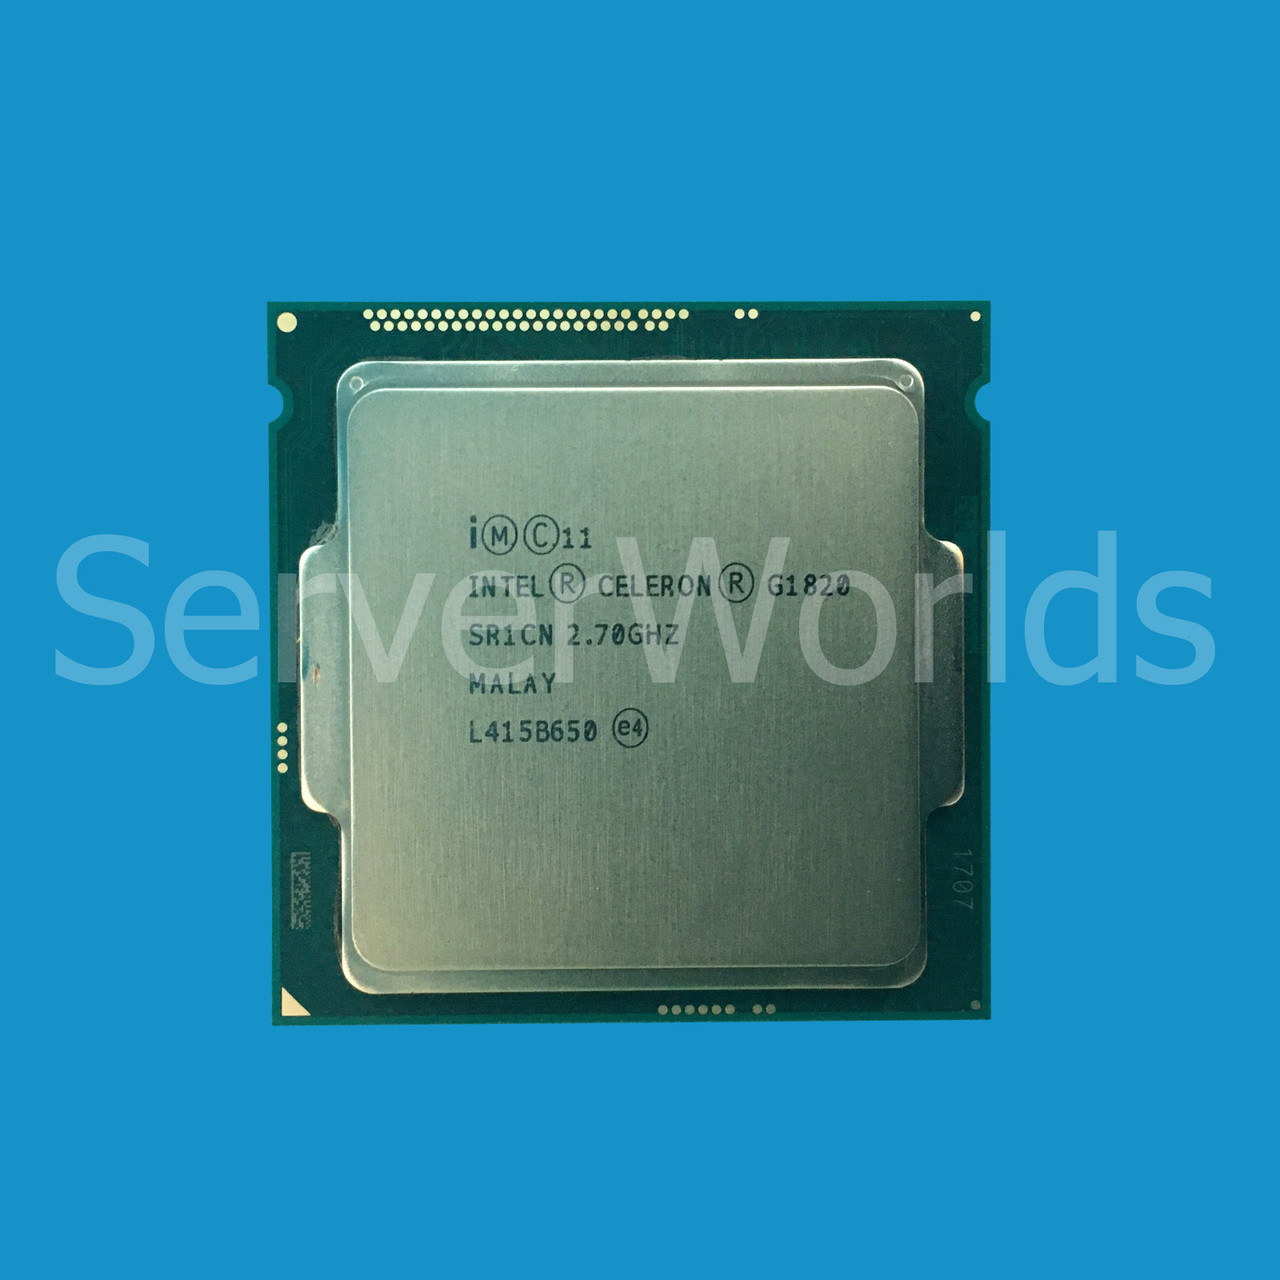 Dell D9Y39 Celeron G1820 DC 2.70Ghz 2MB 5GTs Processor